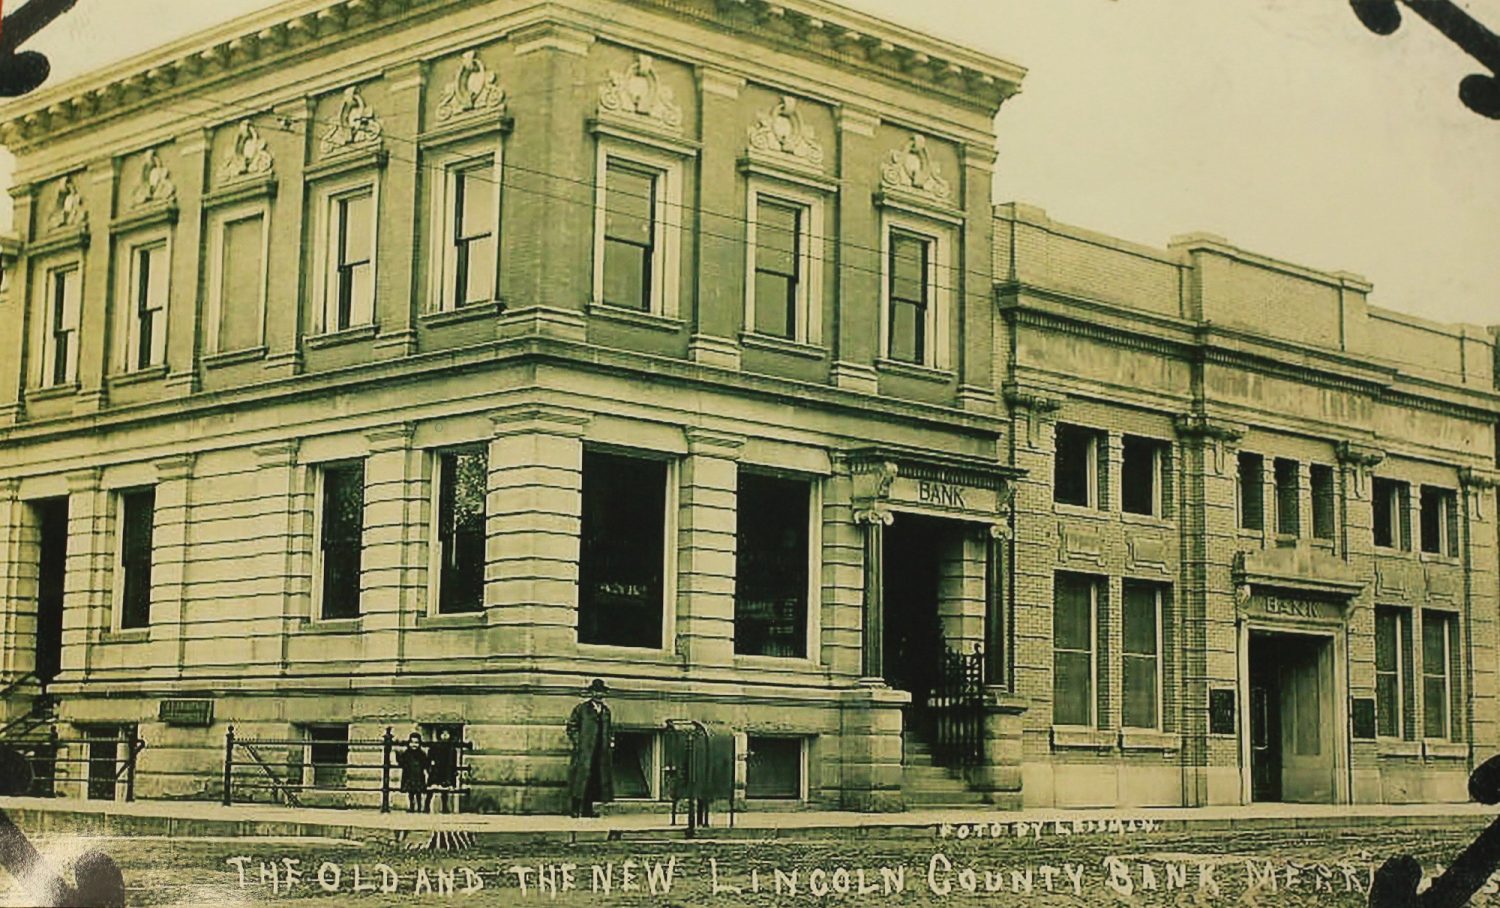 Former bank building has long history in Merrill